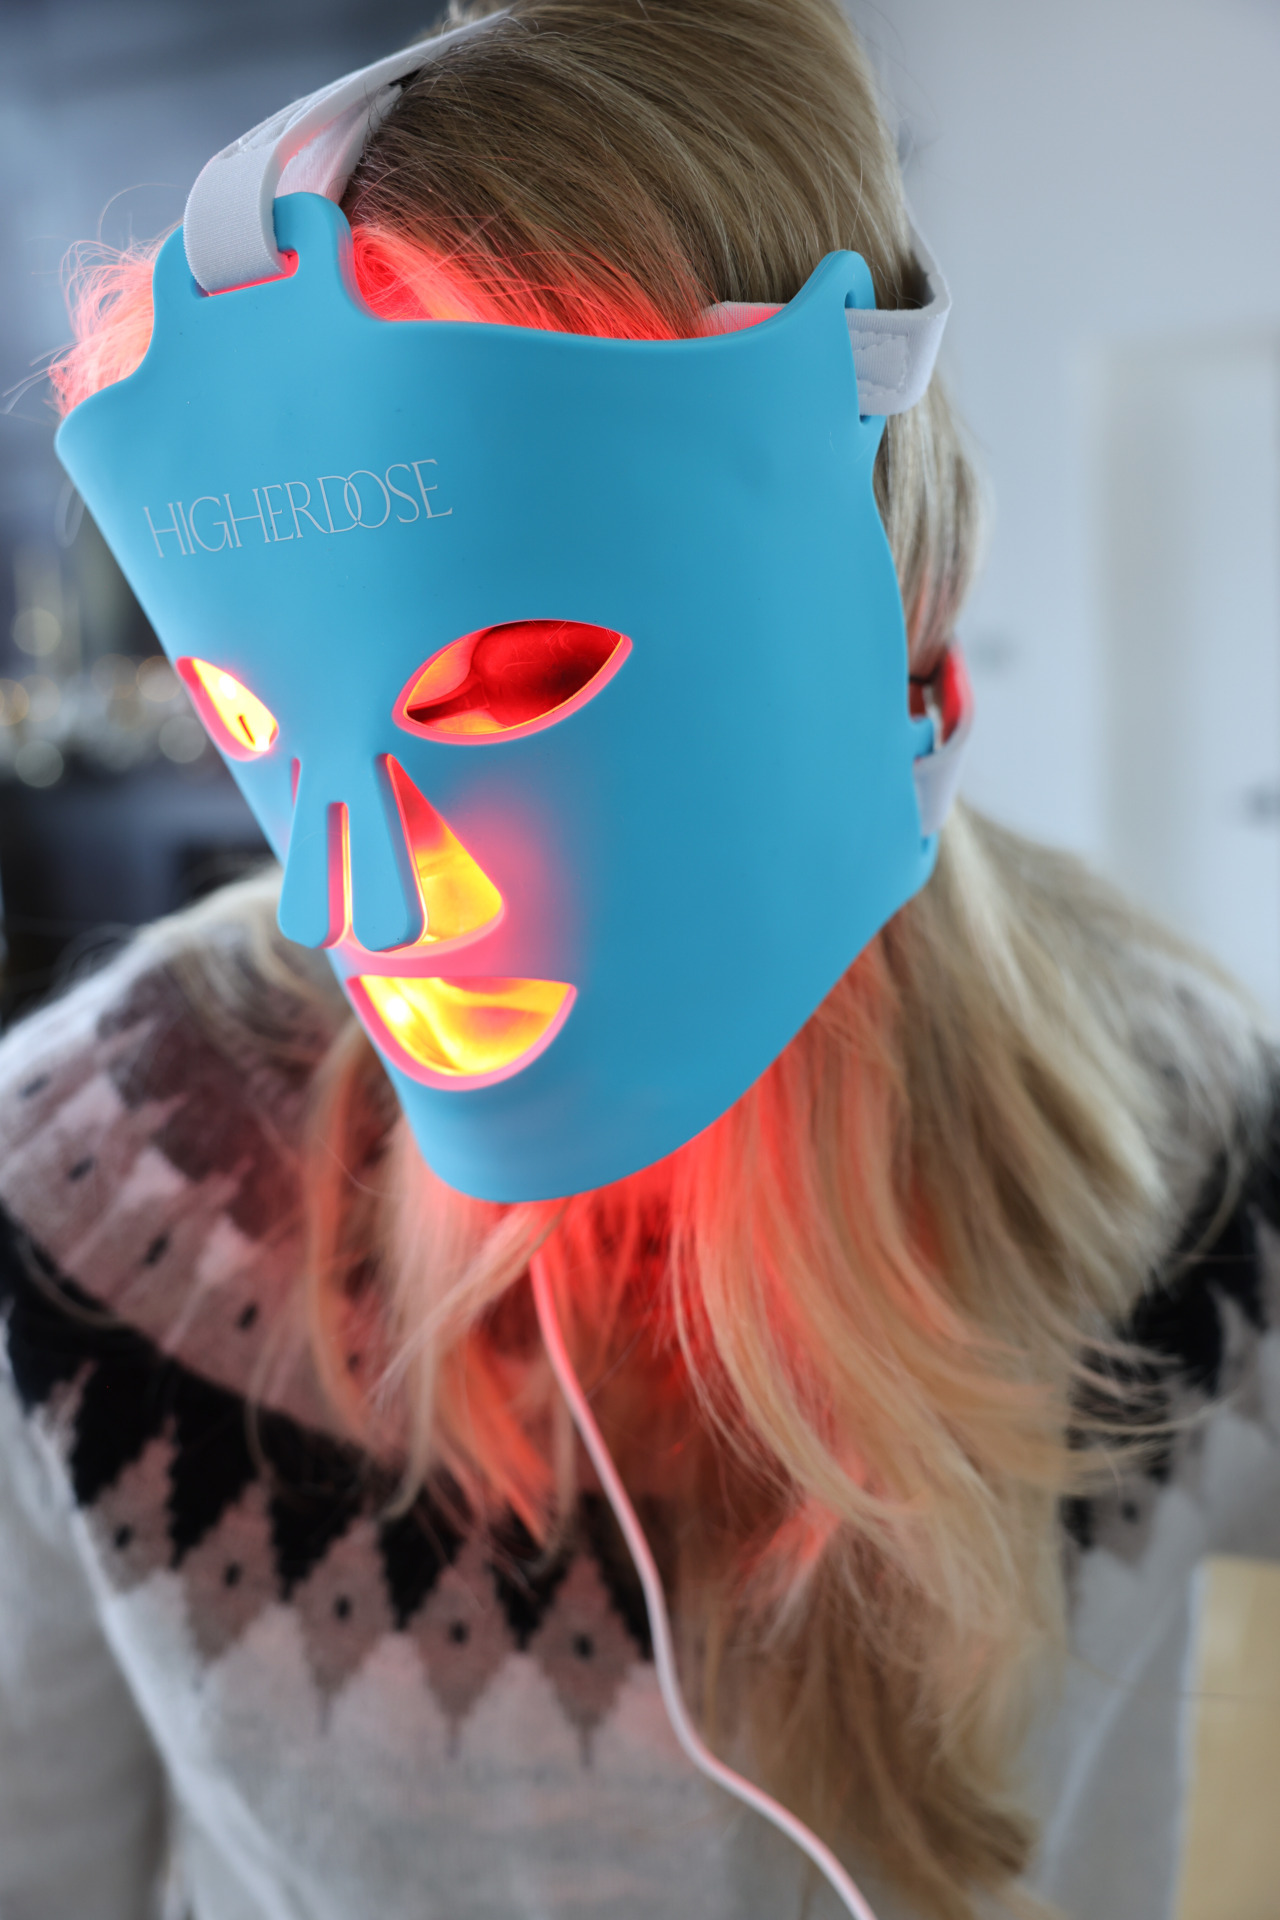 Higherdose red light face mask